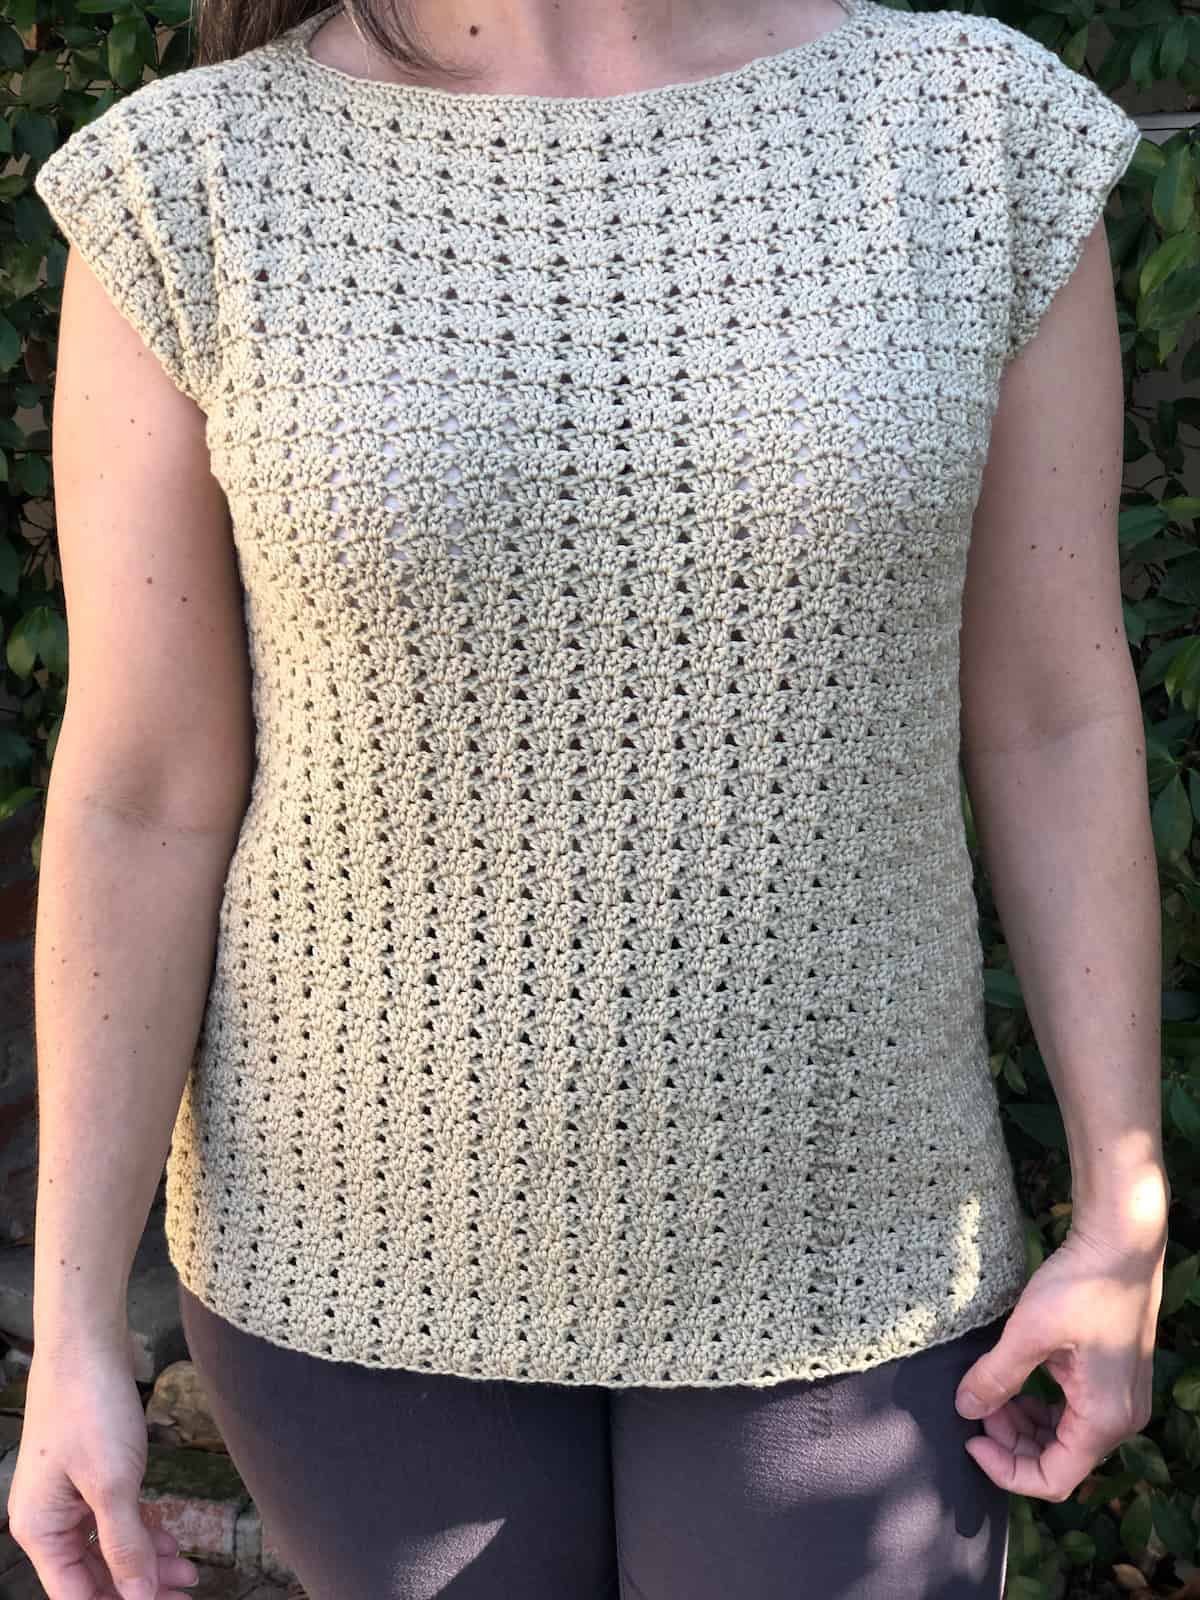 Close up of stitch pattern on women's crochet summer top.